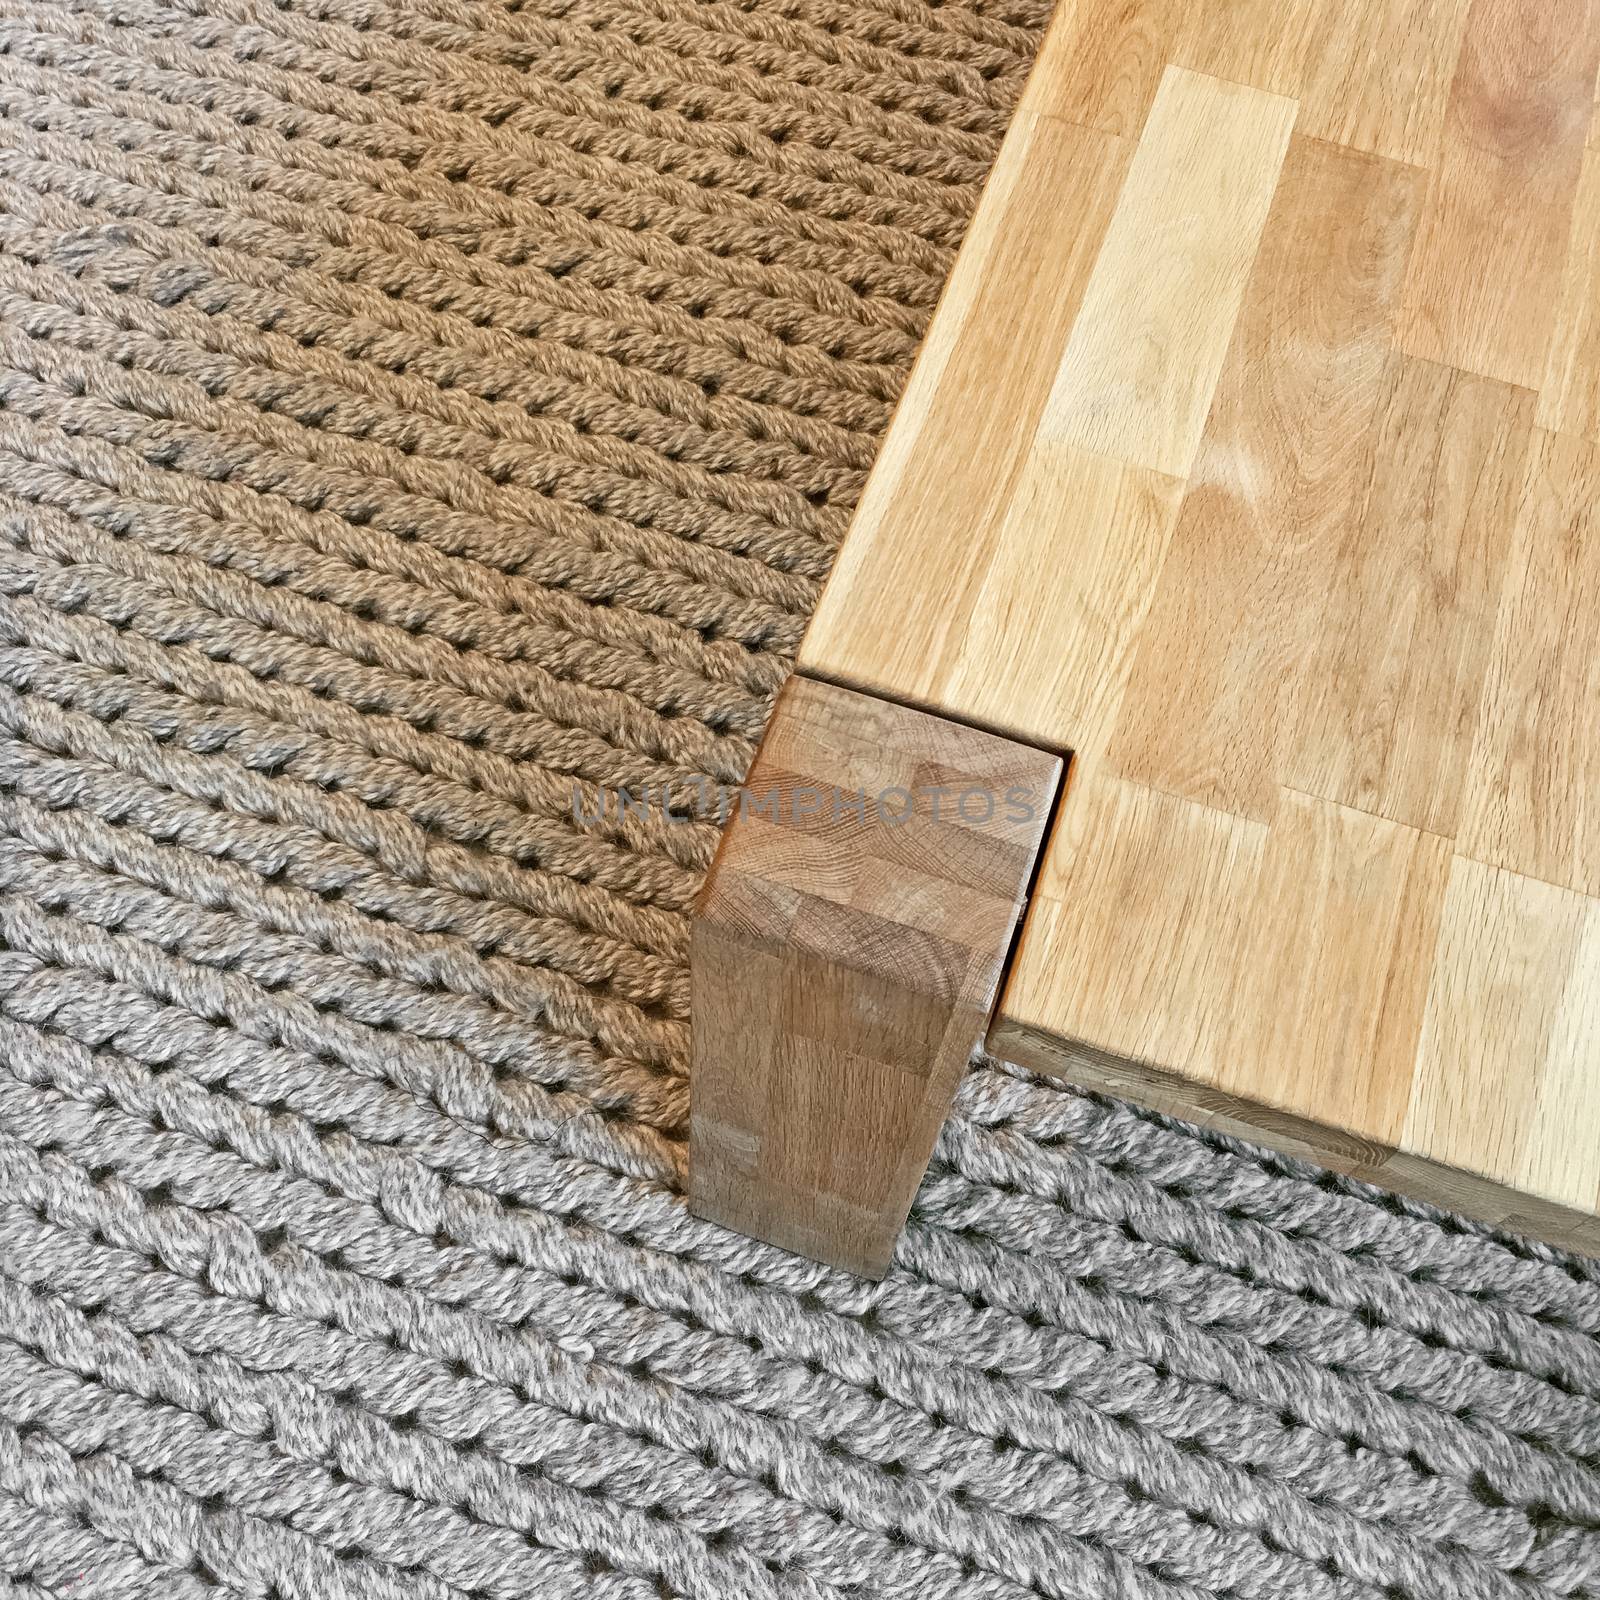 Wooden table on gray knitted carpet. Modern design.